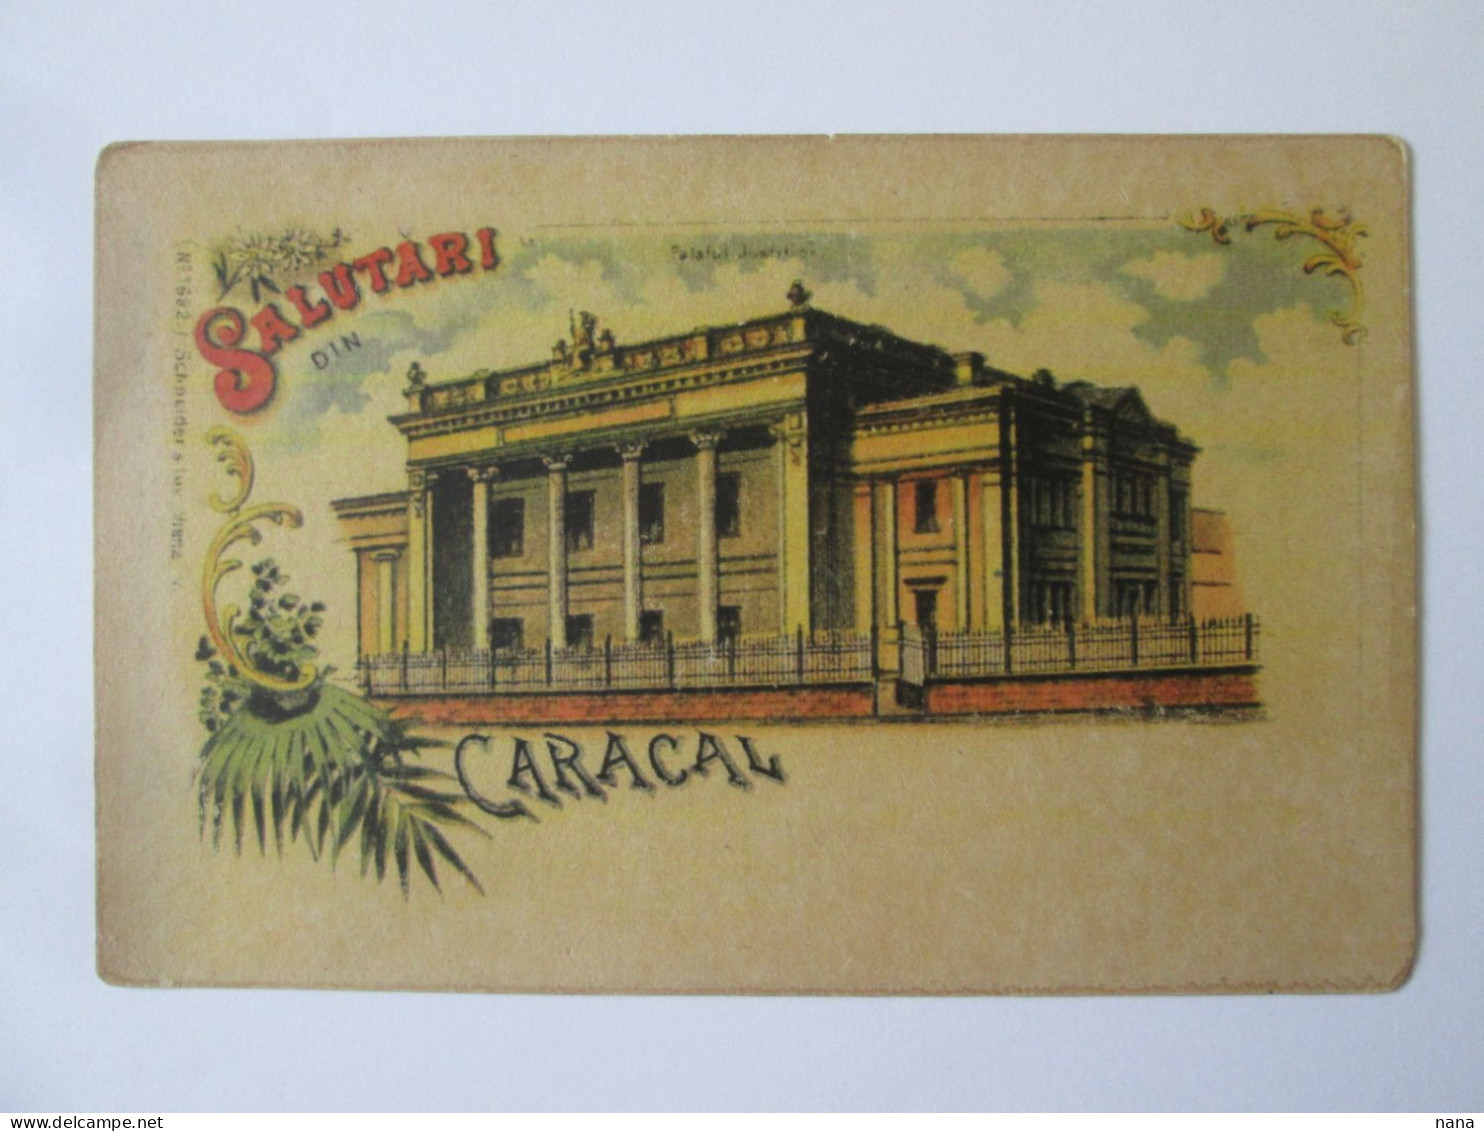 Copie De Carte Postale Roumanie:Salutations Du Caracal/Copy Of Romanian Postcard:Greetings From The Caracal - Rumänien